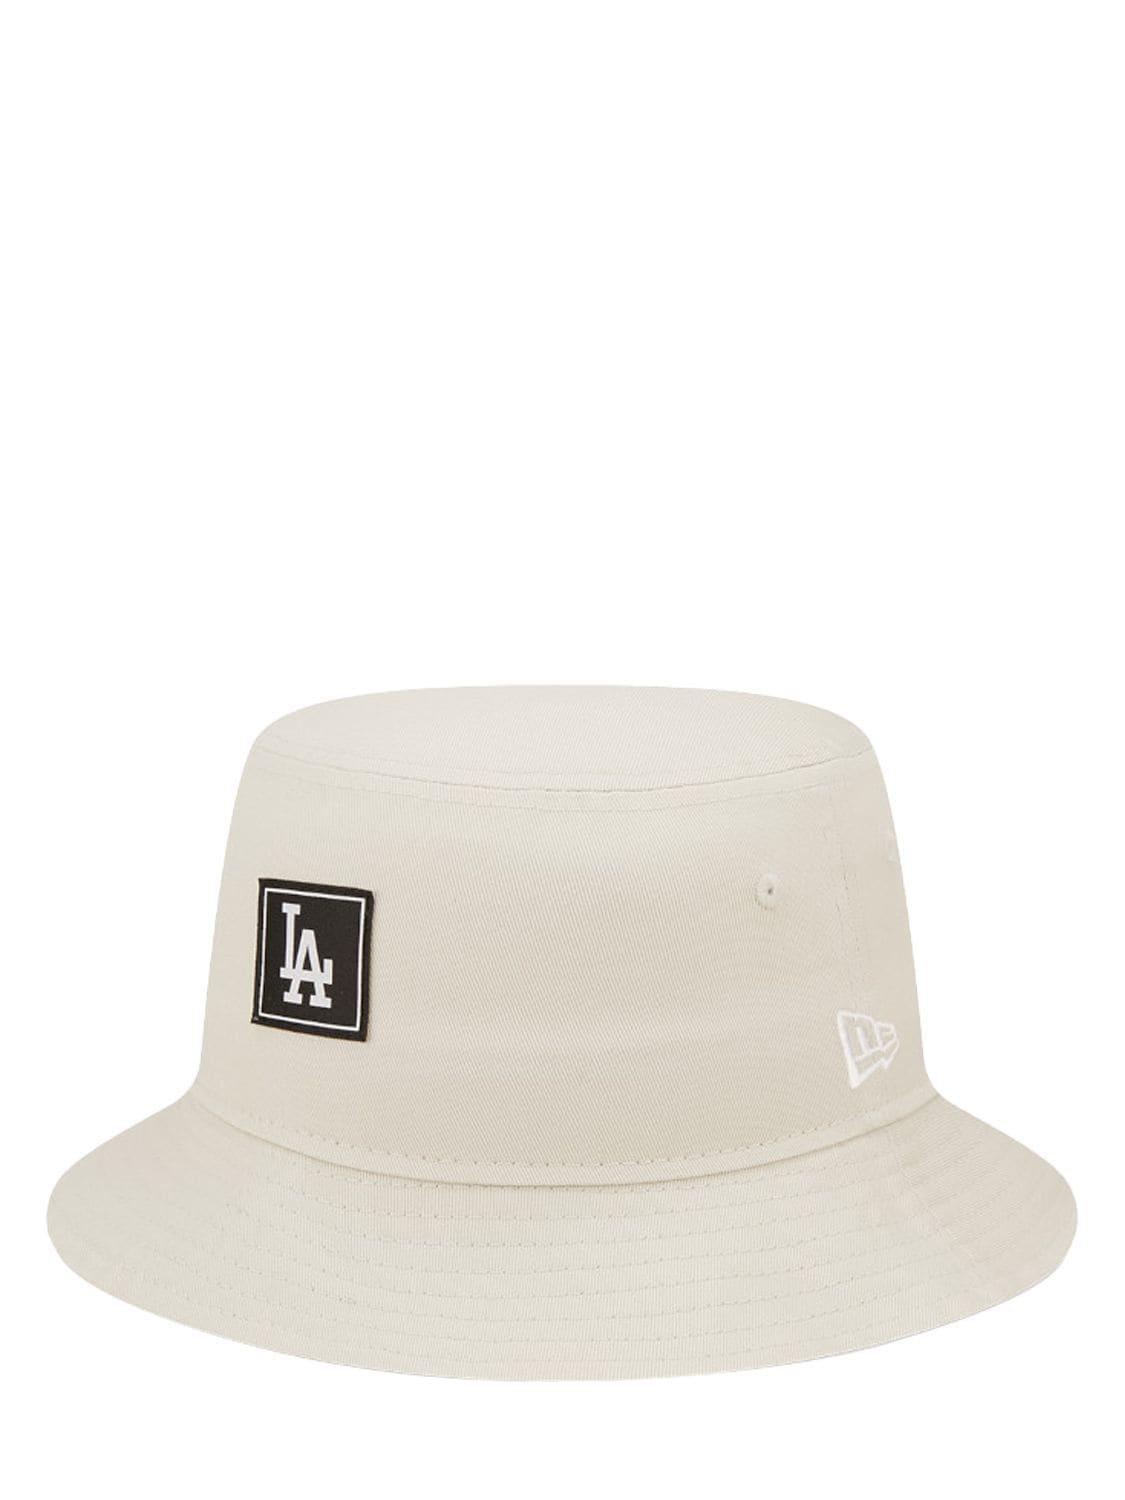 New Era La Dodgers渔夫帽 In White,black